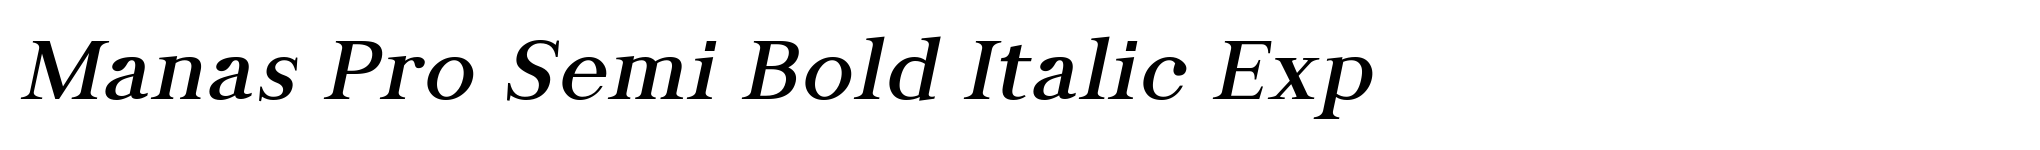 Manas Pro Semi Bold Italic Exp image